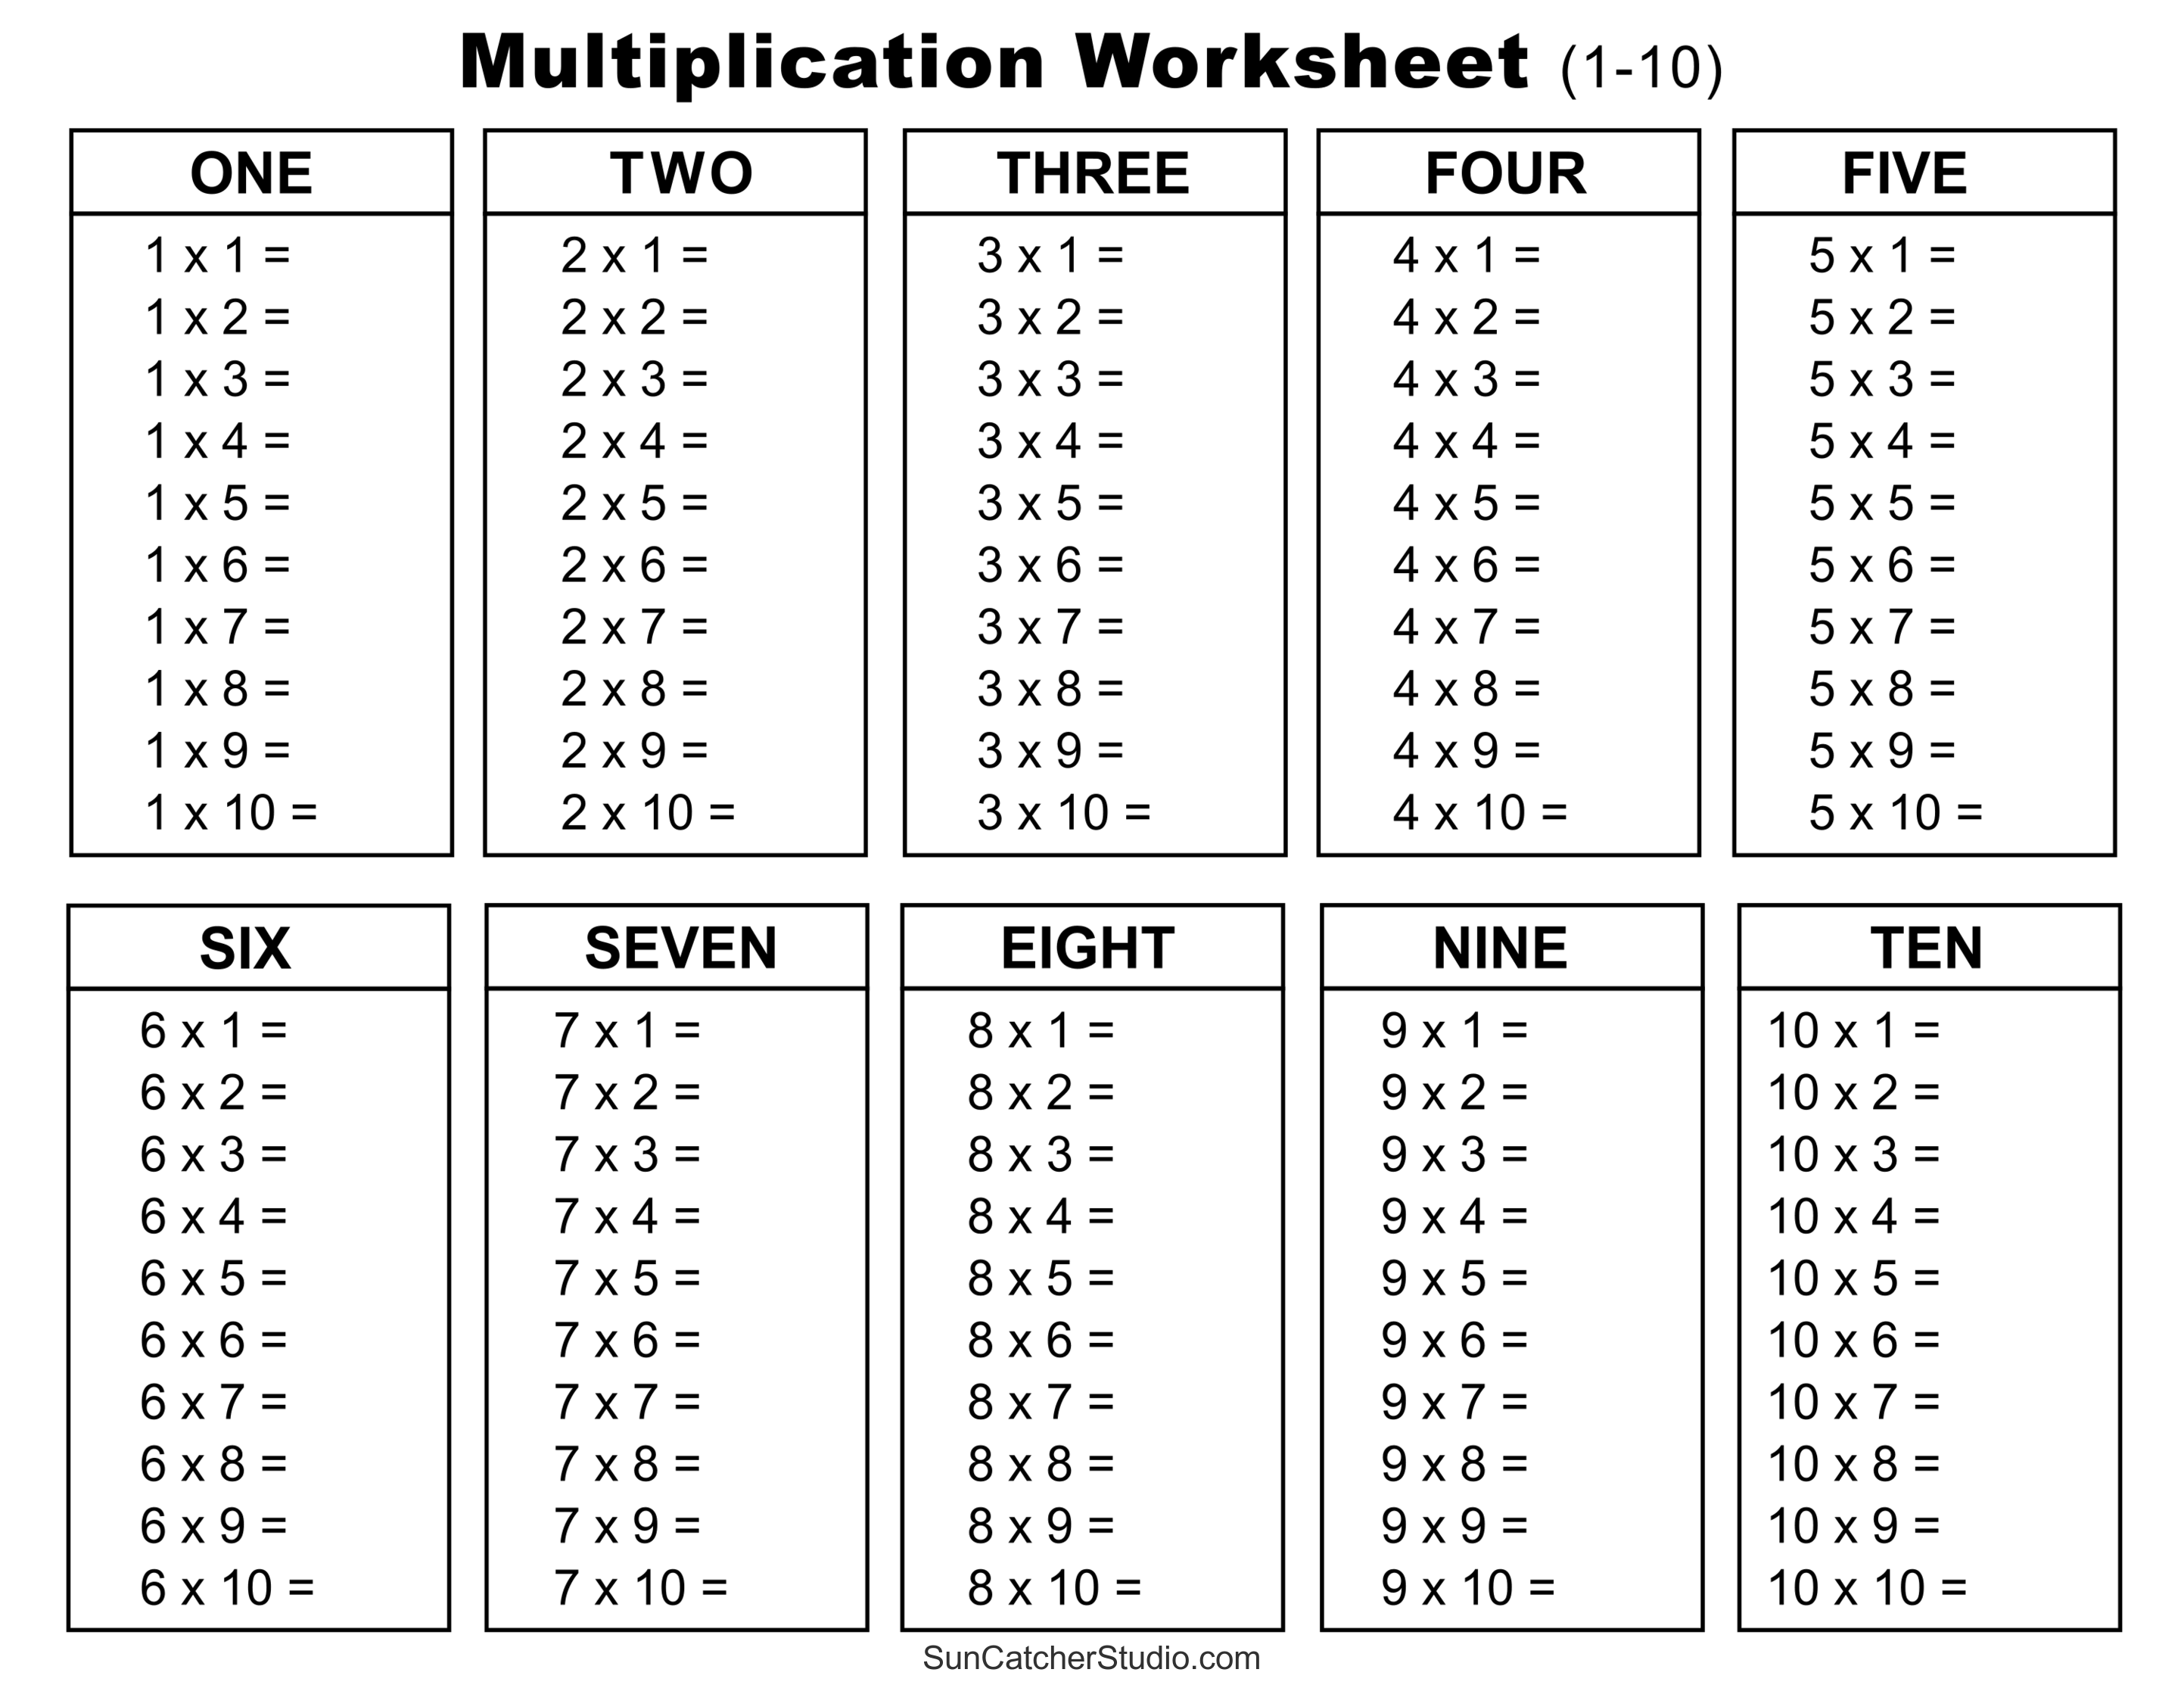 multiplication-table-1-10-printable-pdf-cabinets-matttroy